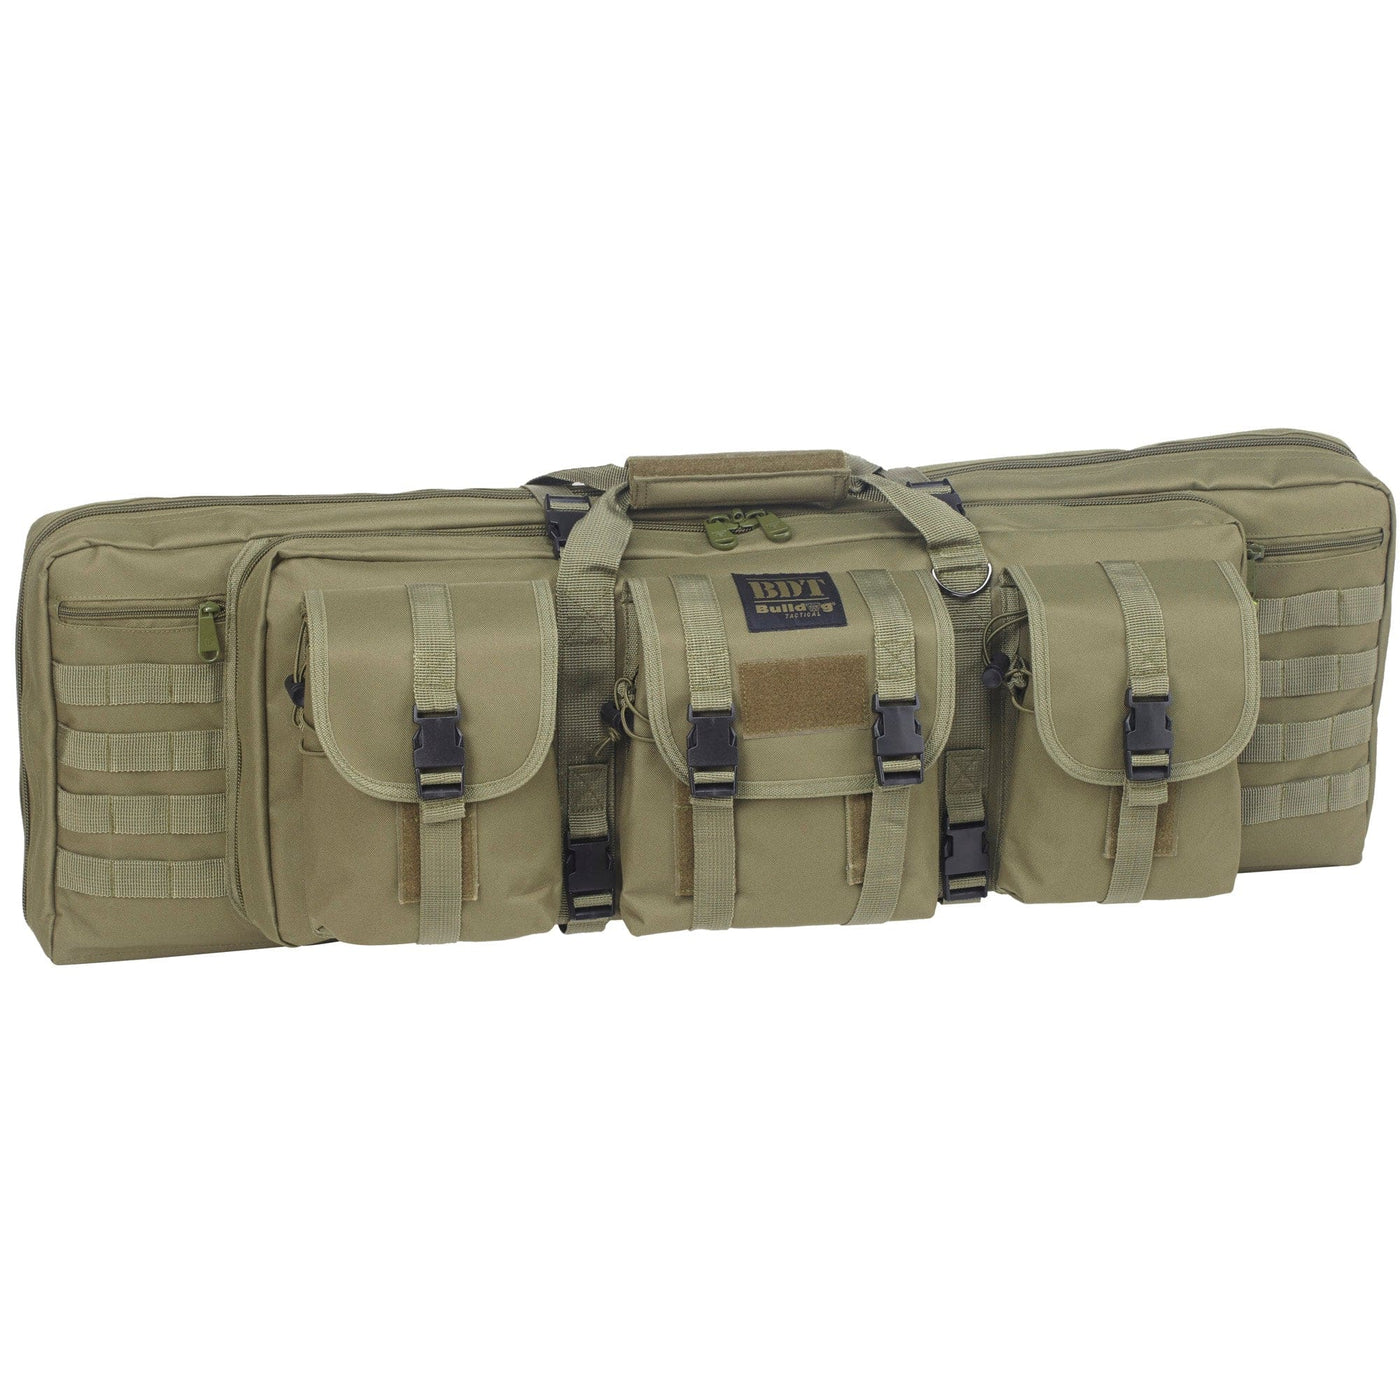 Bulldog Bulldog 37" 2 Gun Tactical Cse - 3 Large Accessory Pockets Grn Green / 37" Firearm Accessories